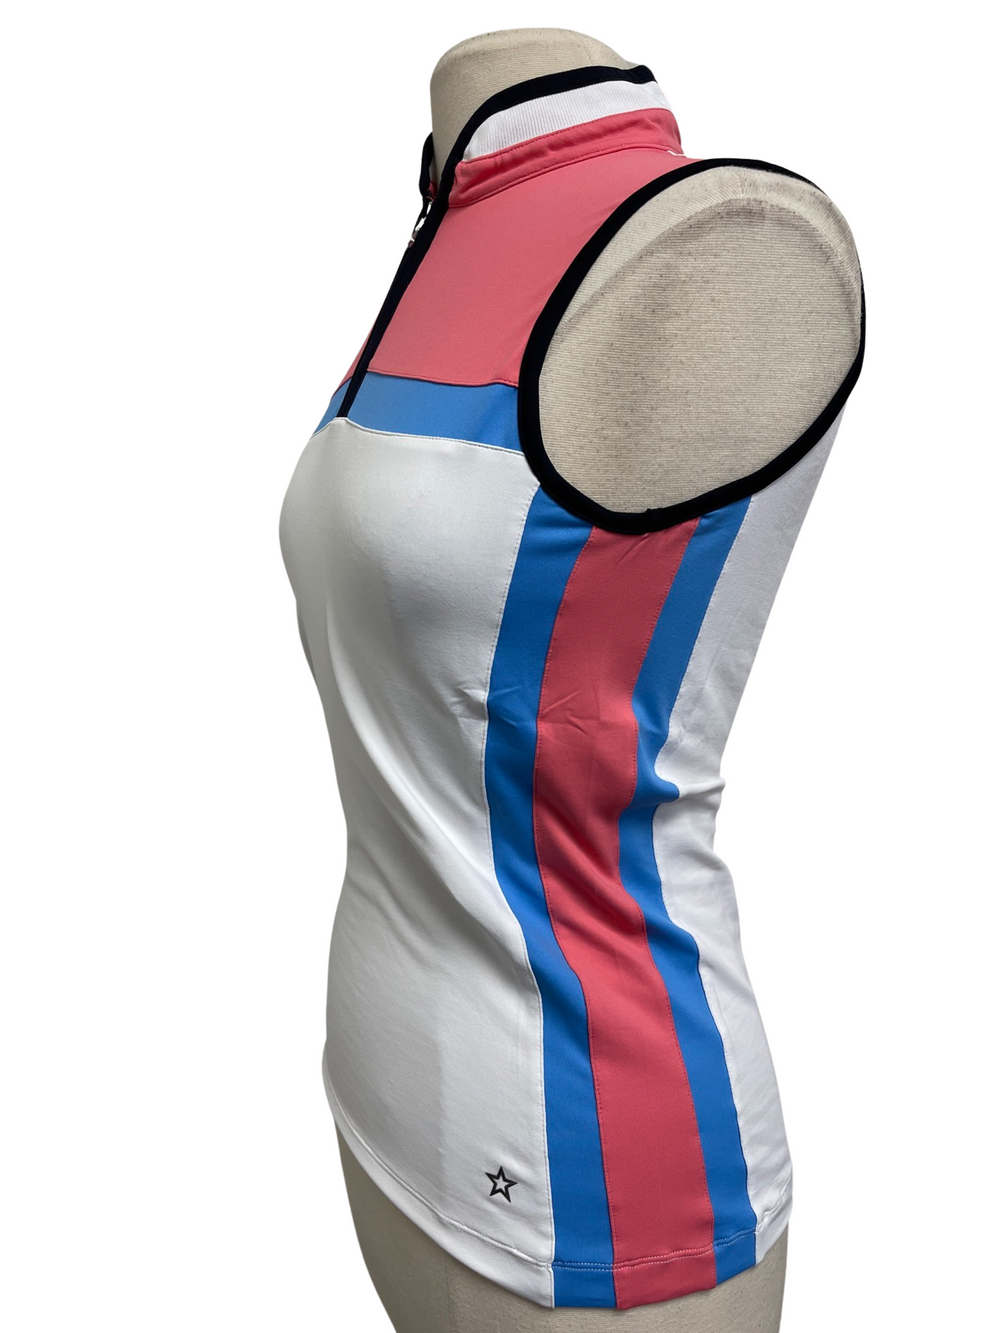 Lohla Sport - The Kelsey Sleeveless Top - White/ Pink - Skorzie